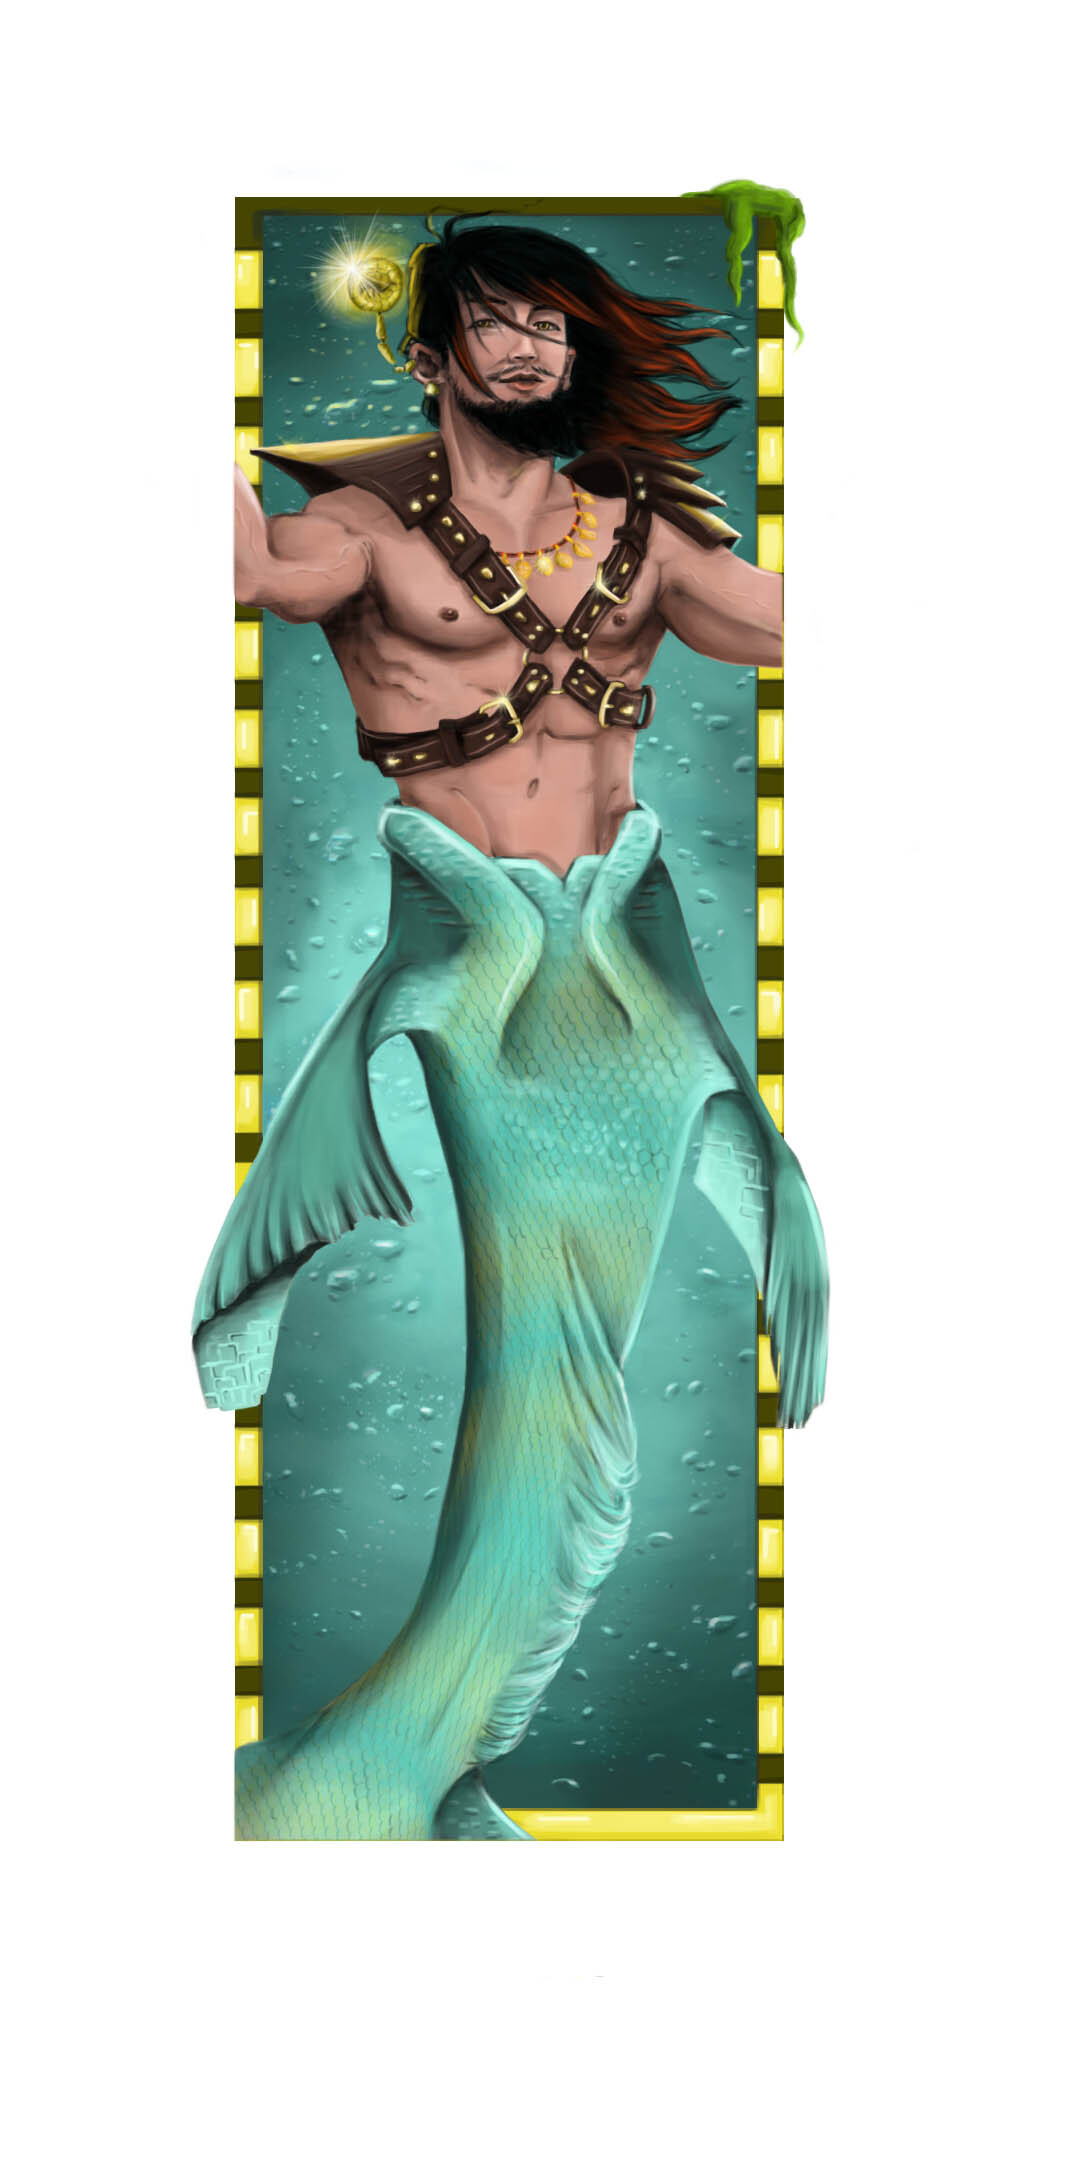 43 Sirens and Mermaids ideas  mermaid art, mermaids and mermen, fantasy art